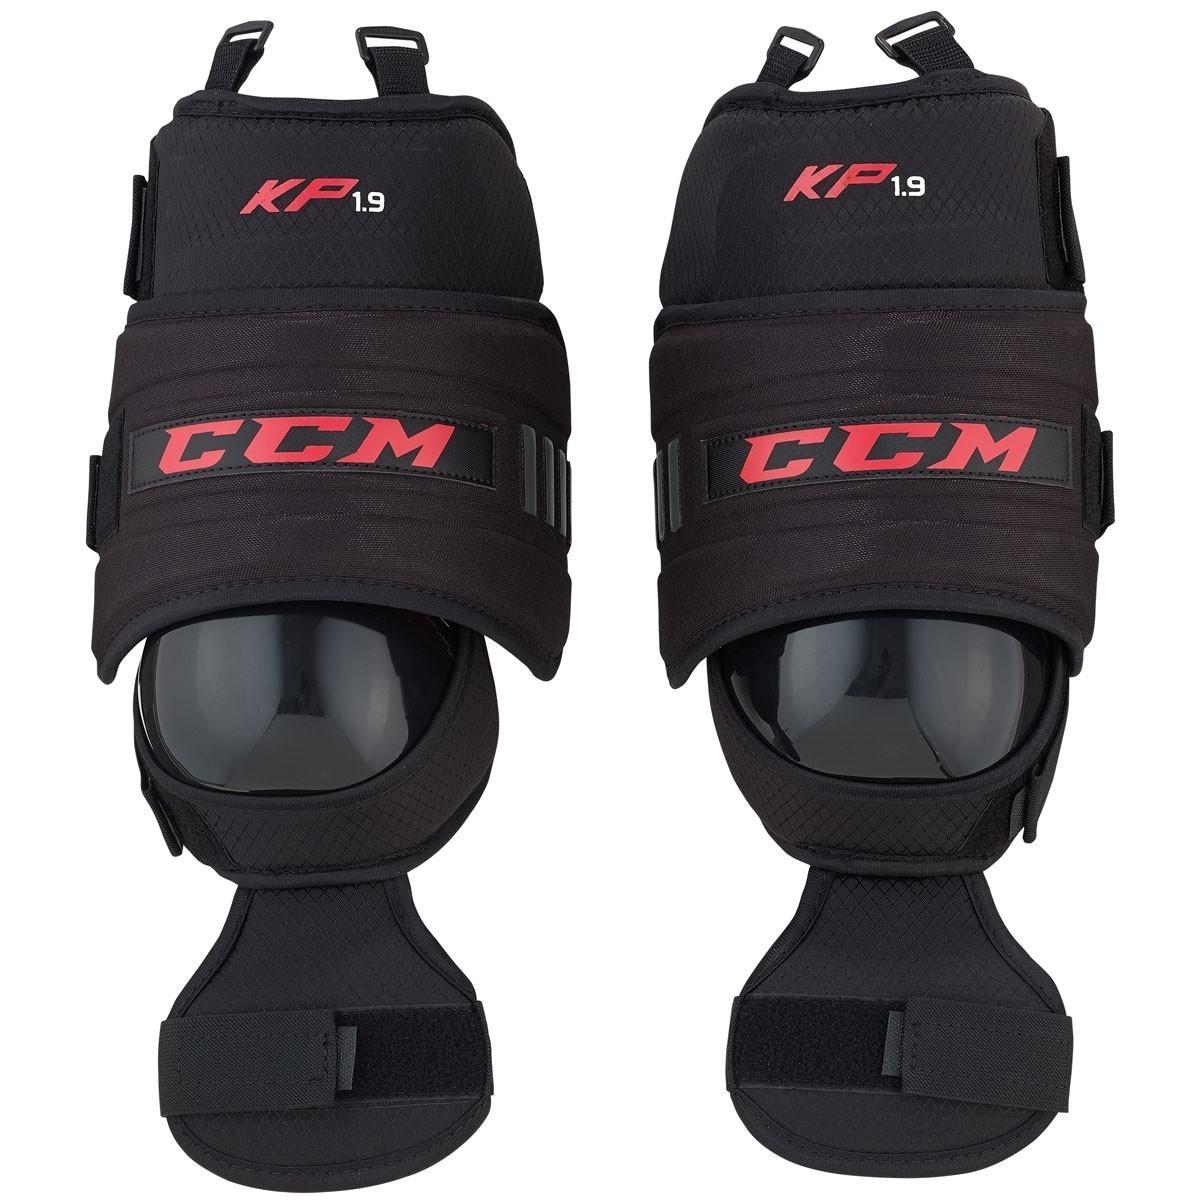 CCM 1.9 Int. Goalie Knee Guardsproduct zoom image #1